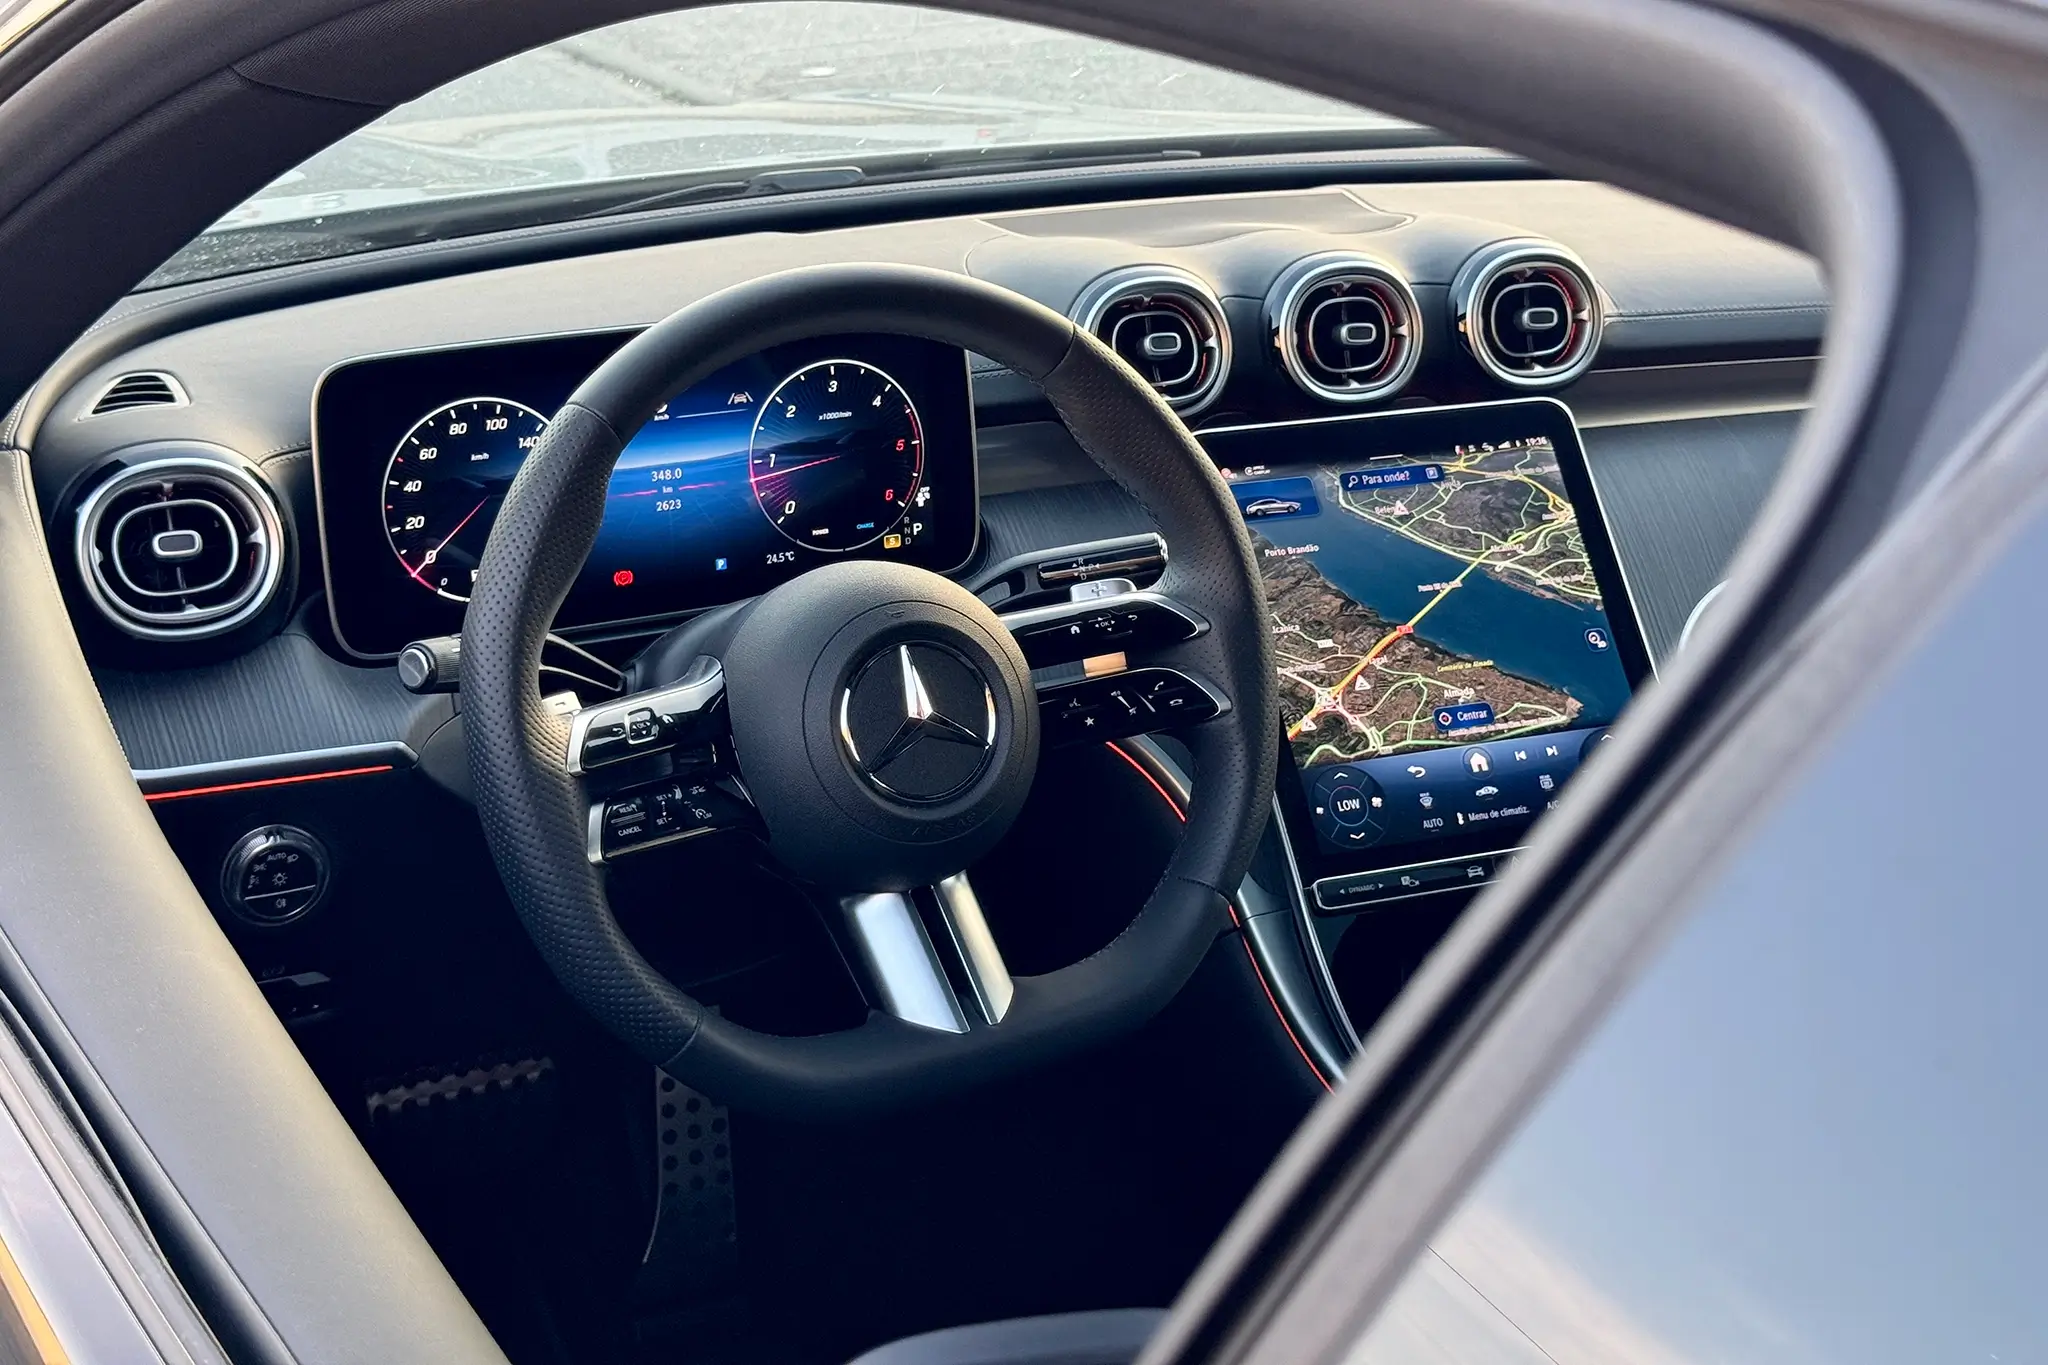 Mercedes-Benz CLE 220d Coupé - interior